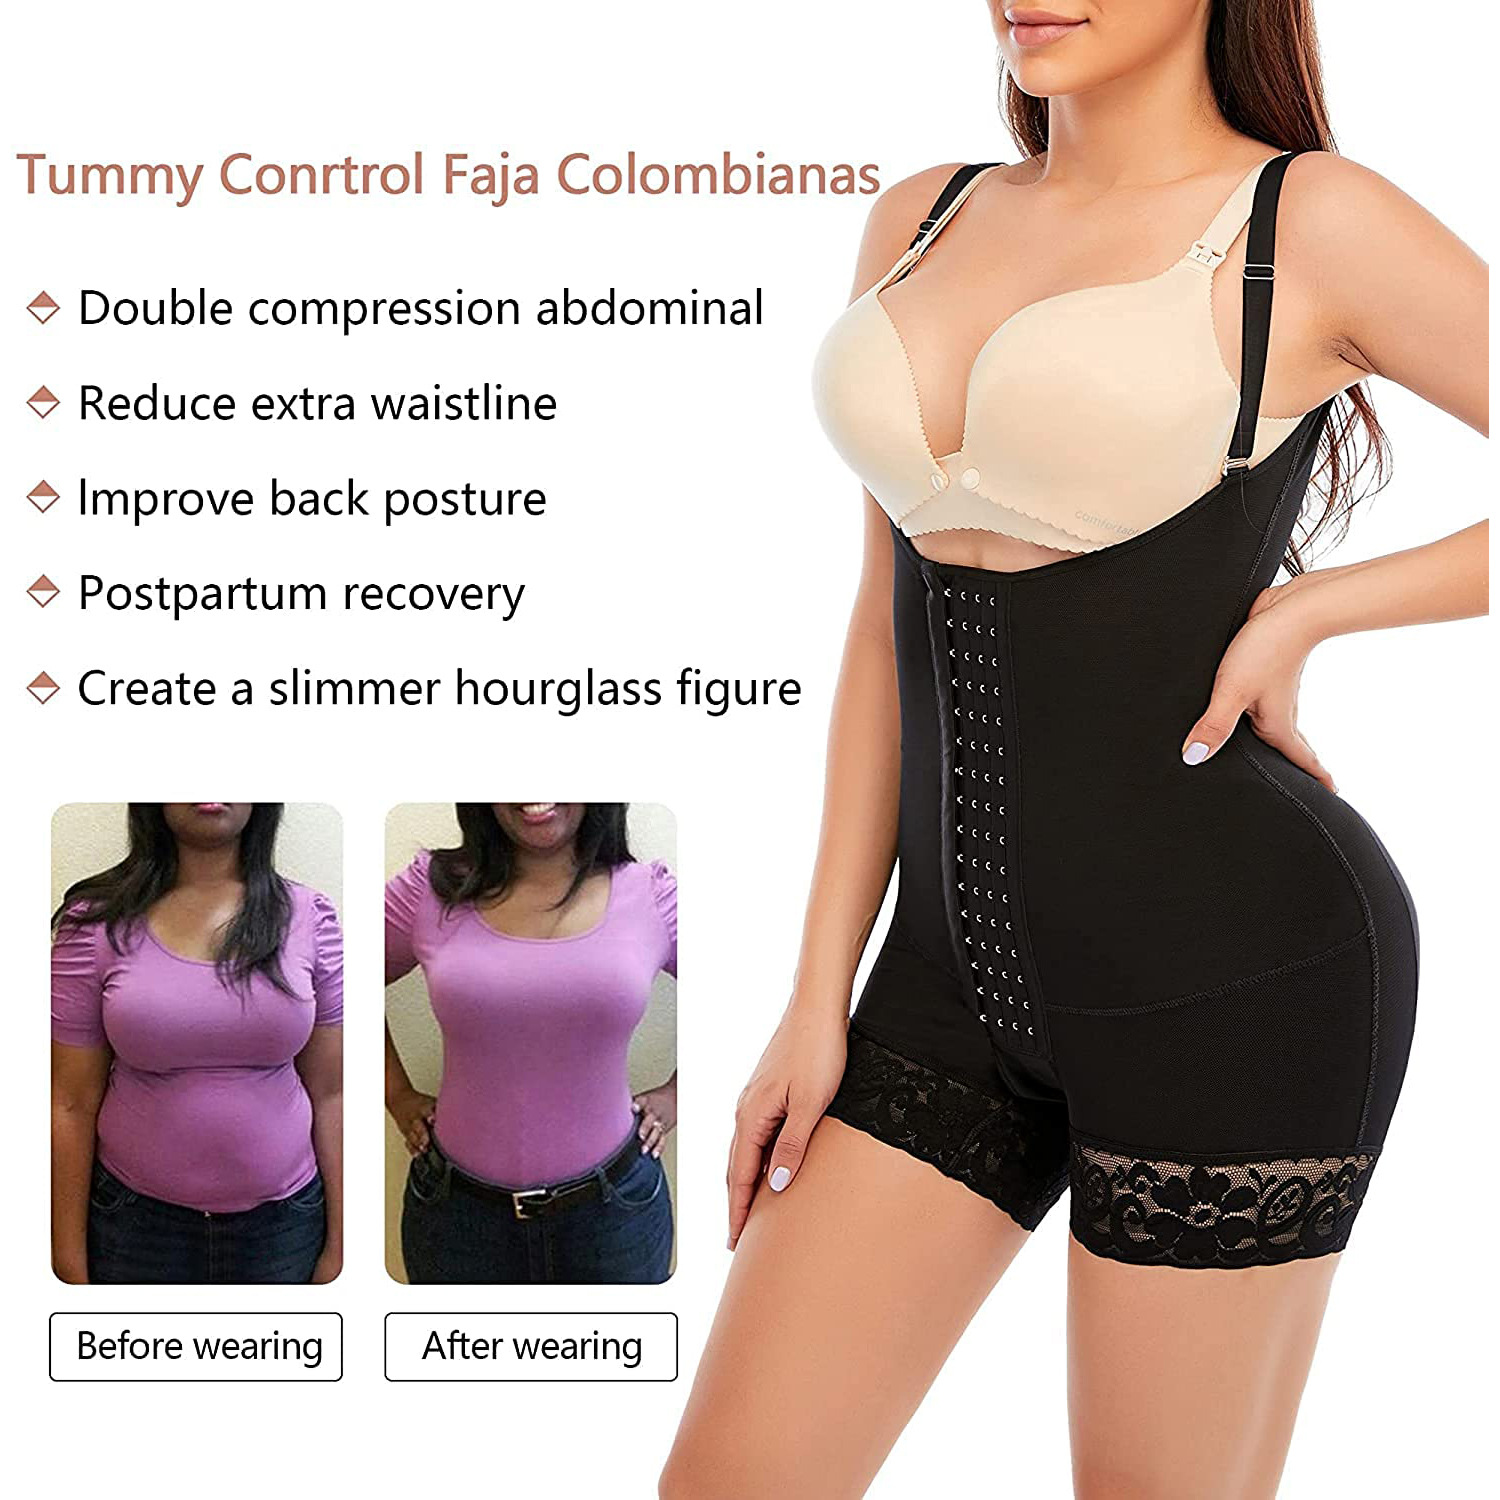 Tummy Control Fajas Colombianas For Women Butt Lifter